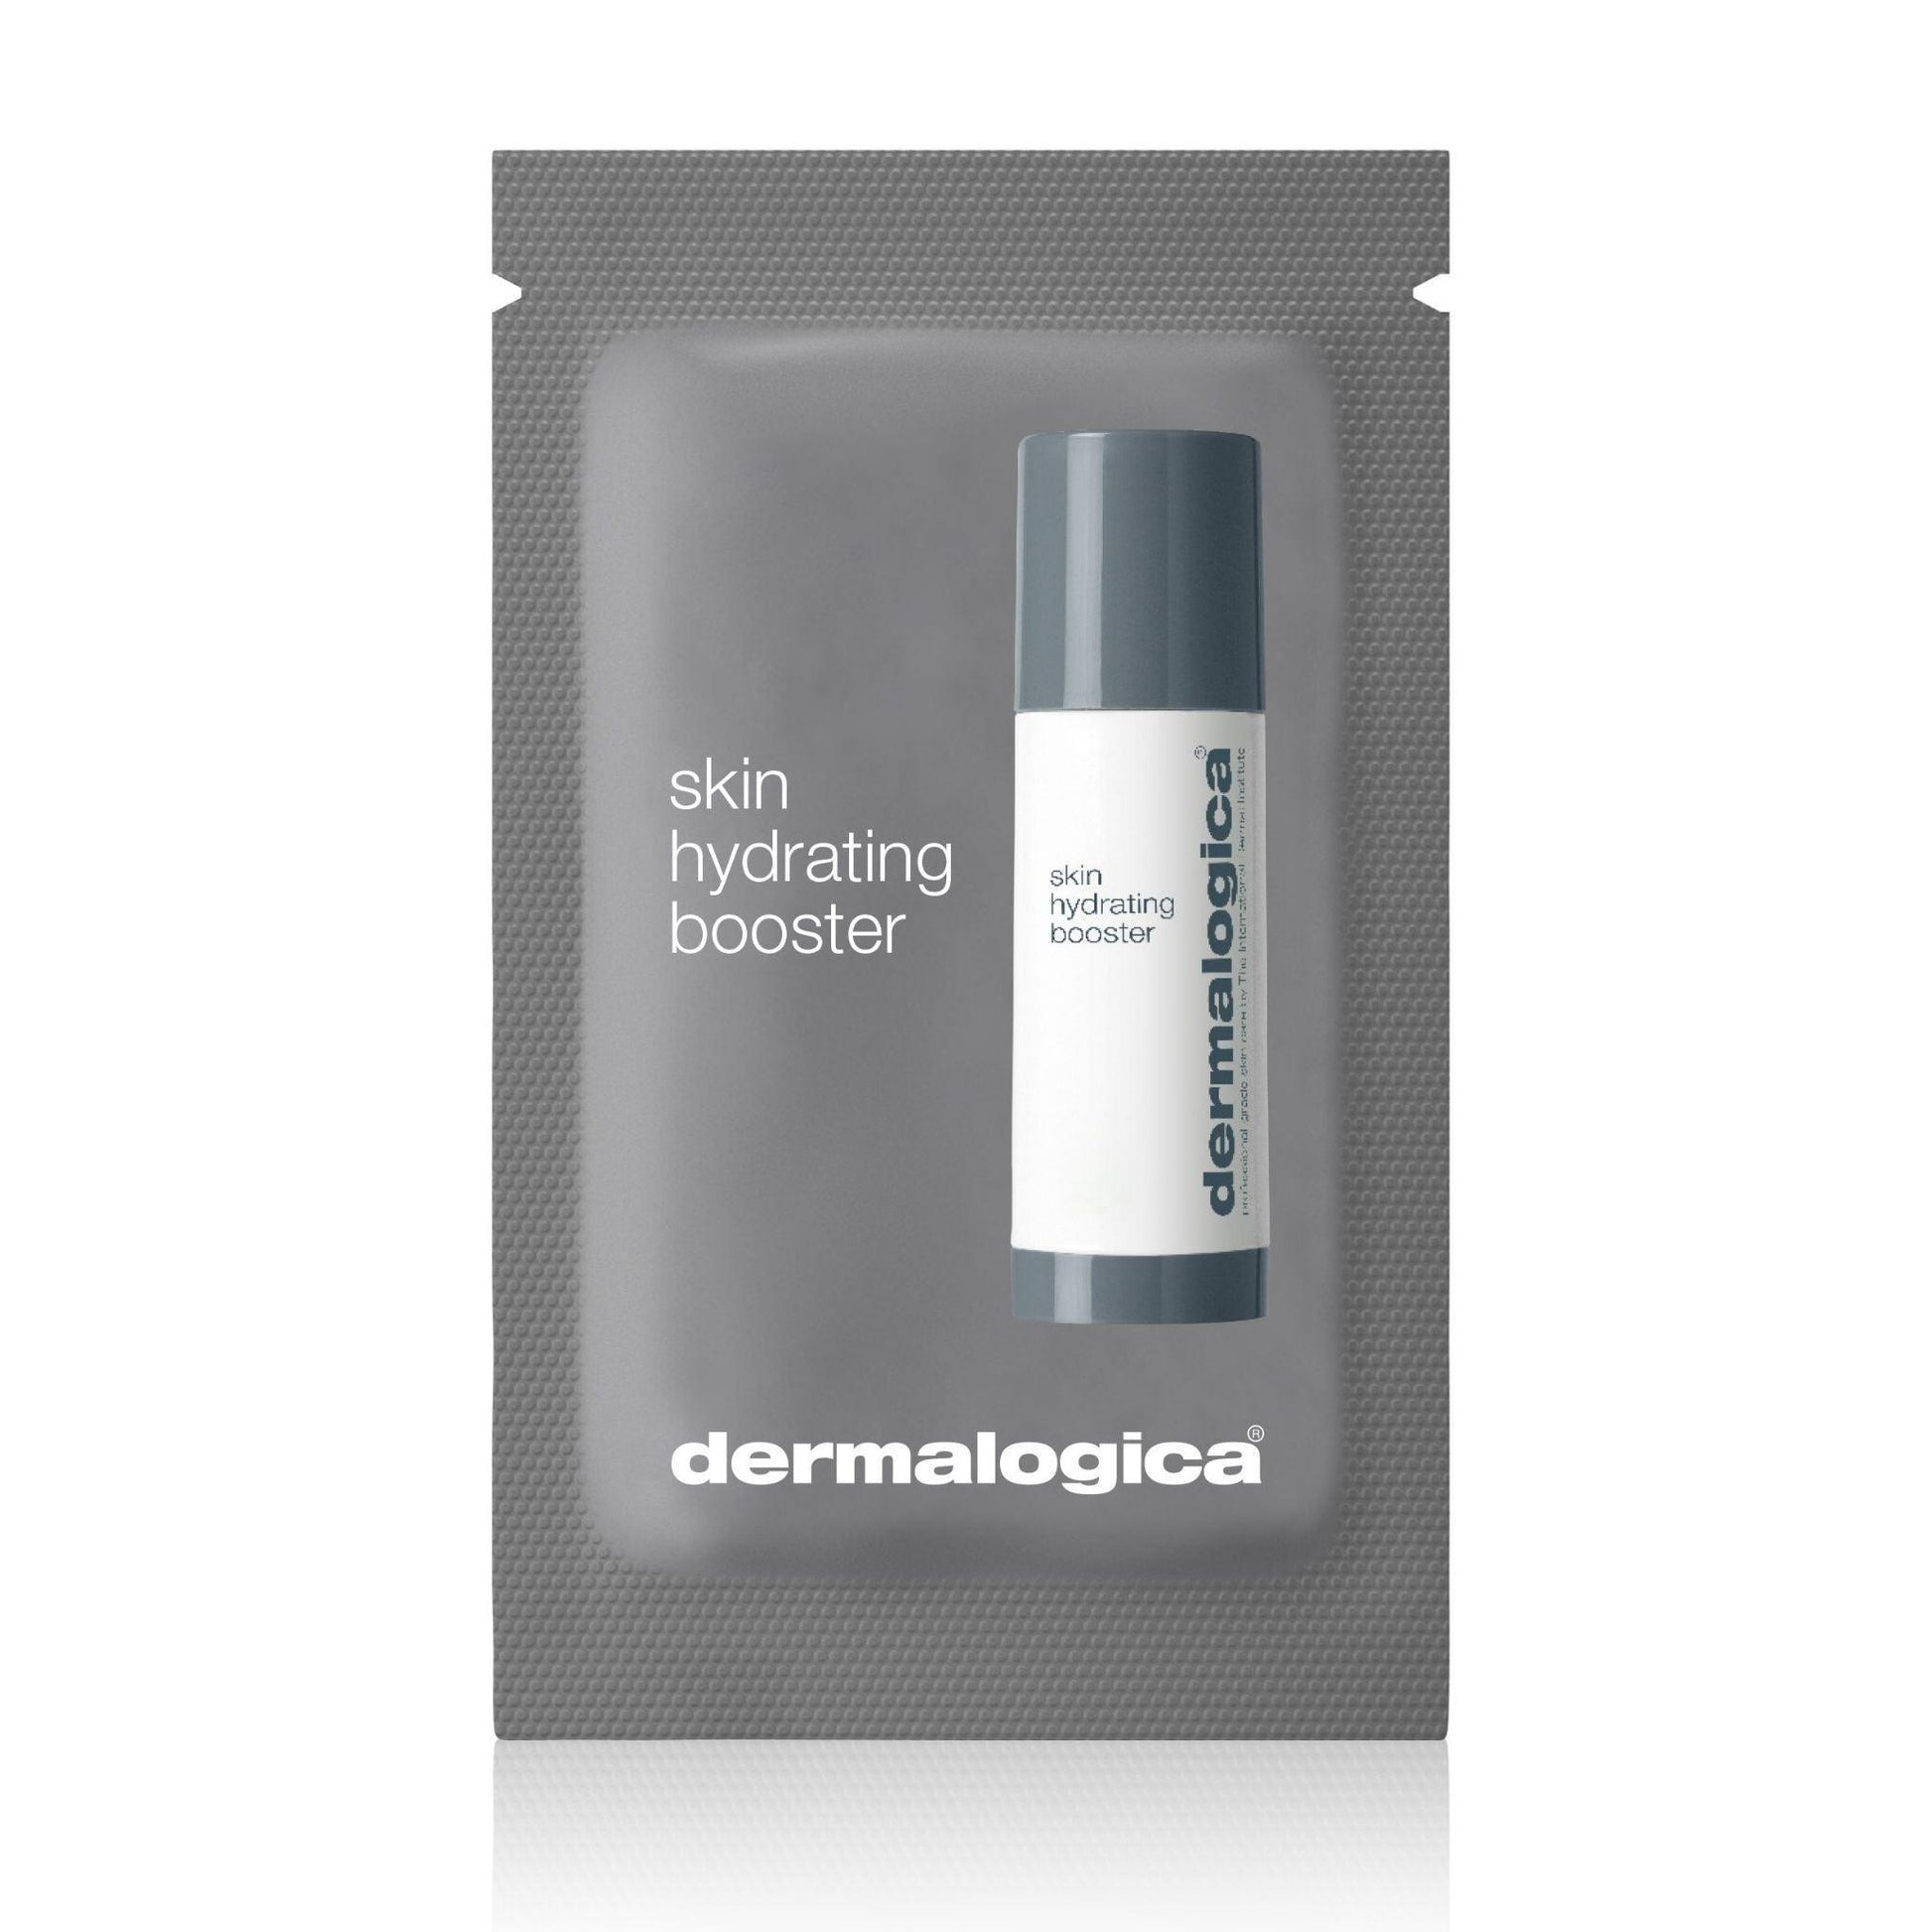 skin hydrating booster (sample) - Dermalogica Singapore